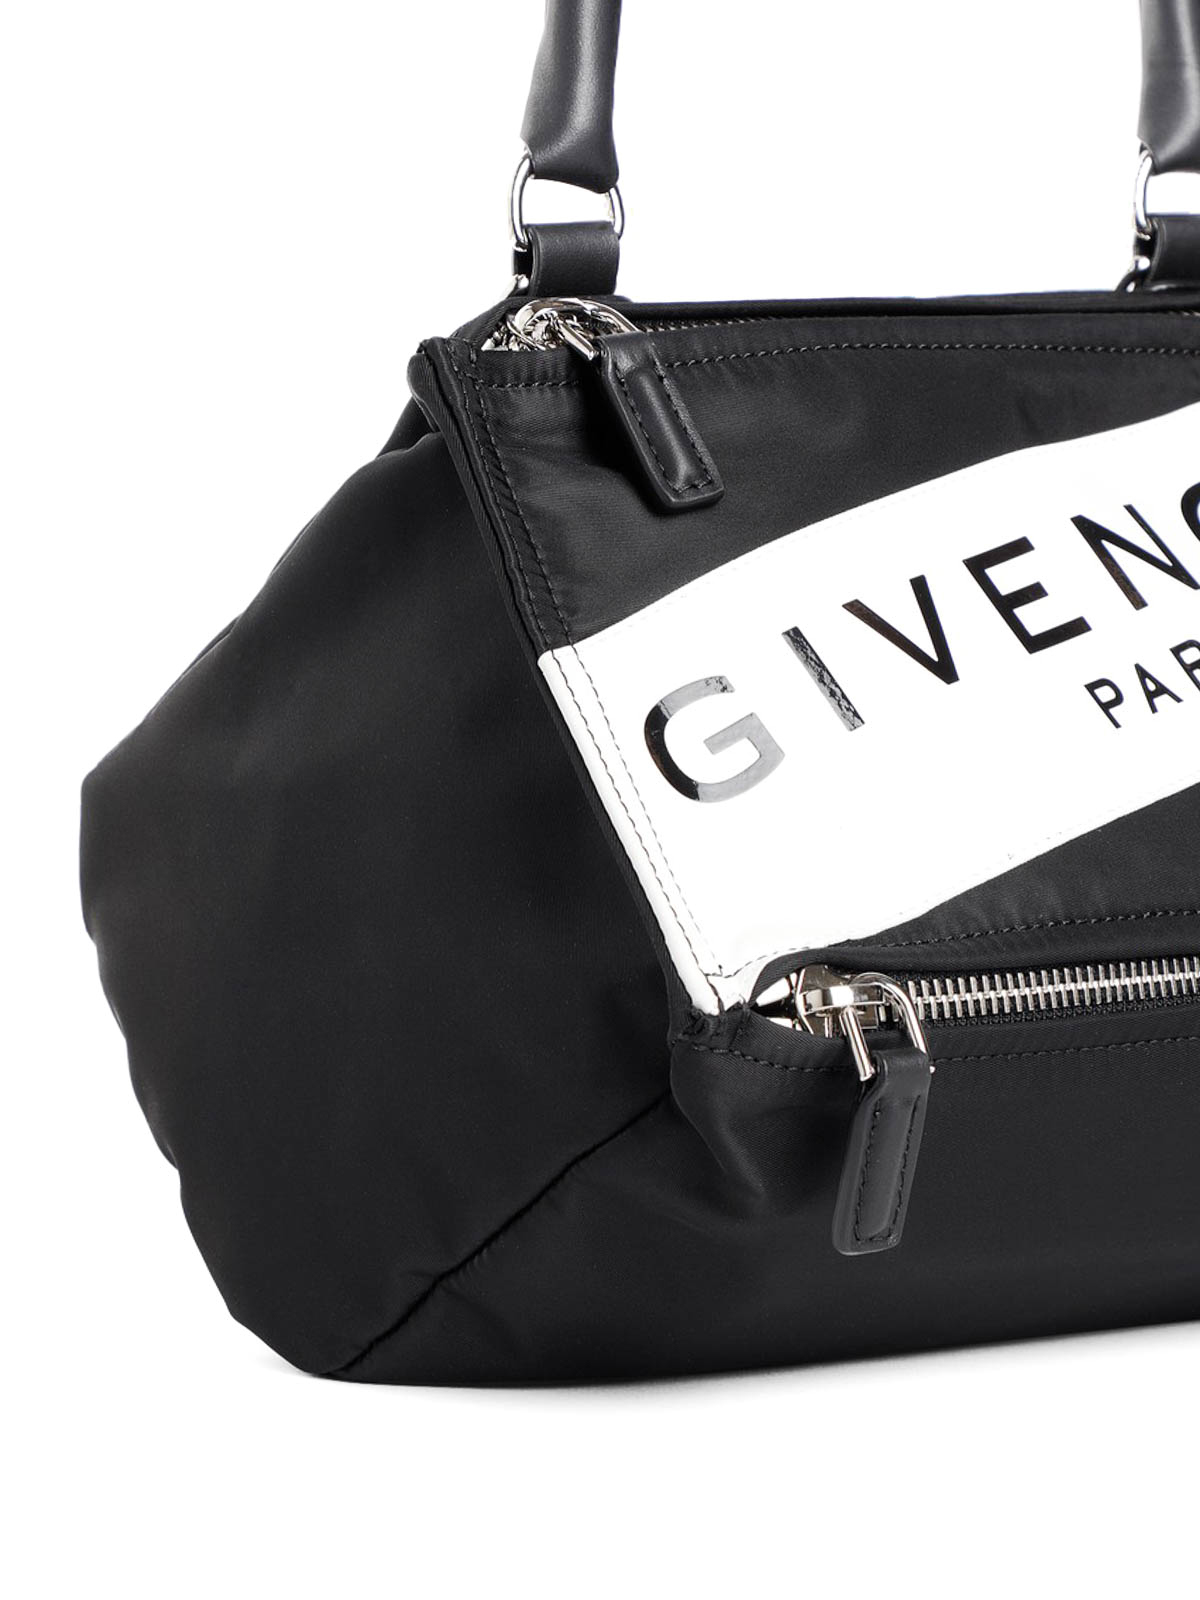 Givenchy Pandora  Givenchy pandora, Givenchy bag pandora, Bags